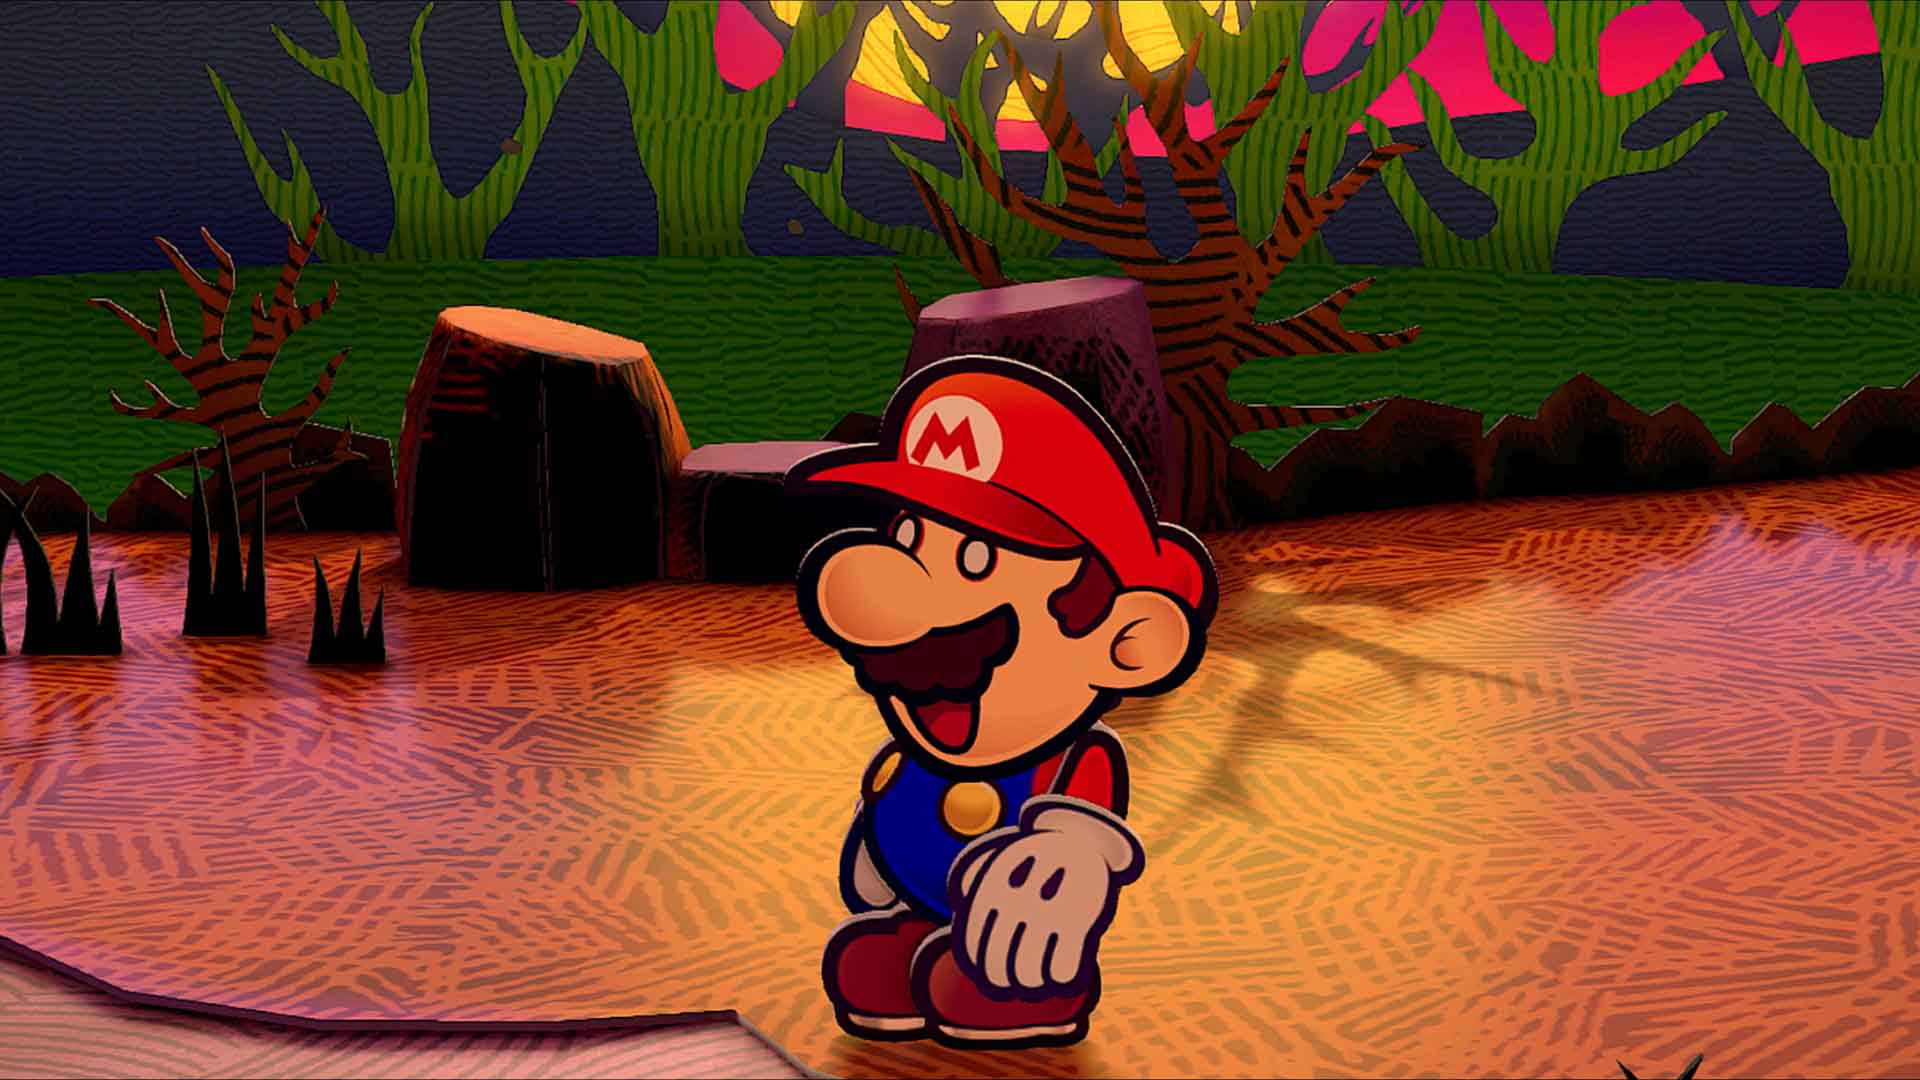 Super Mario Odyssey review: Mario's densest, deepest adventure yet